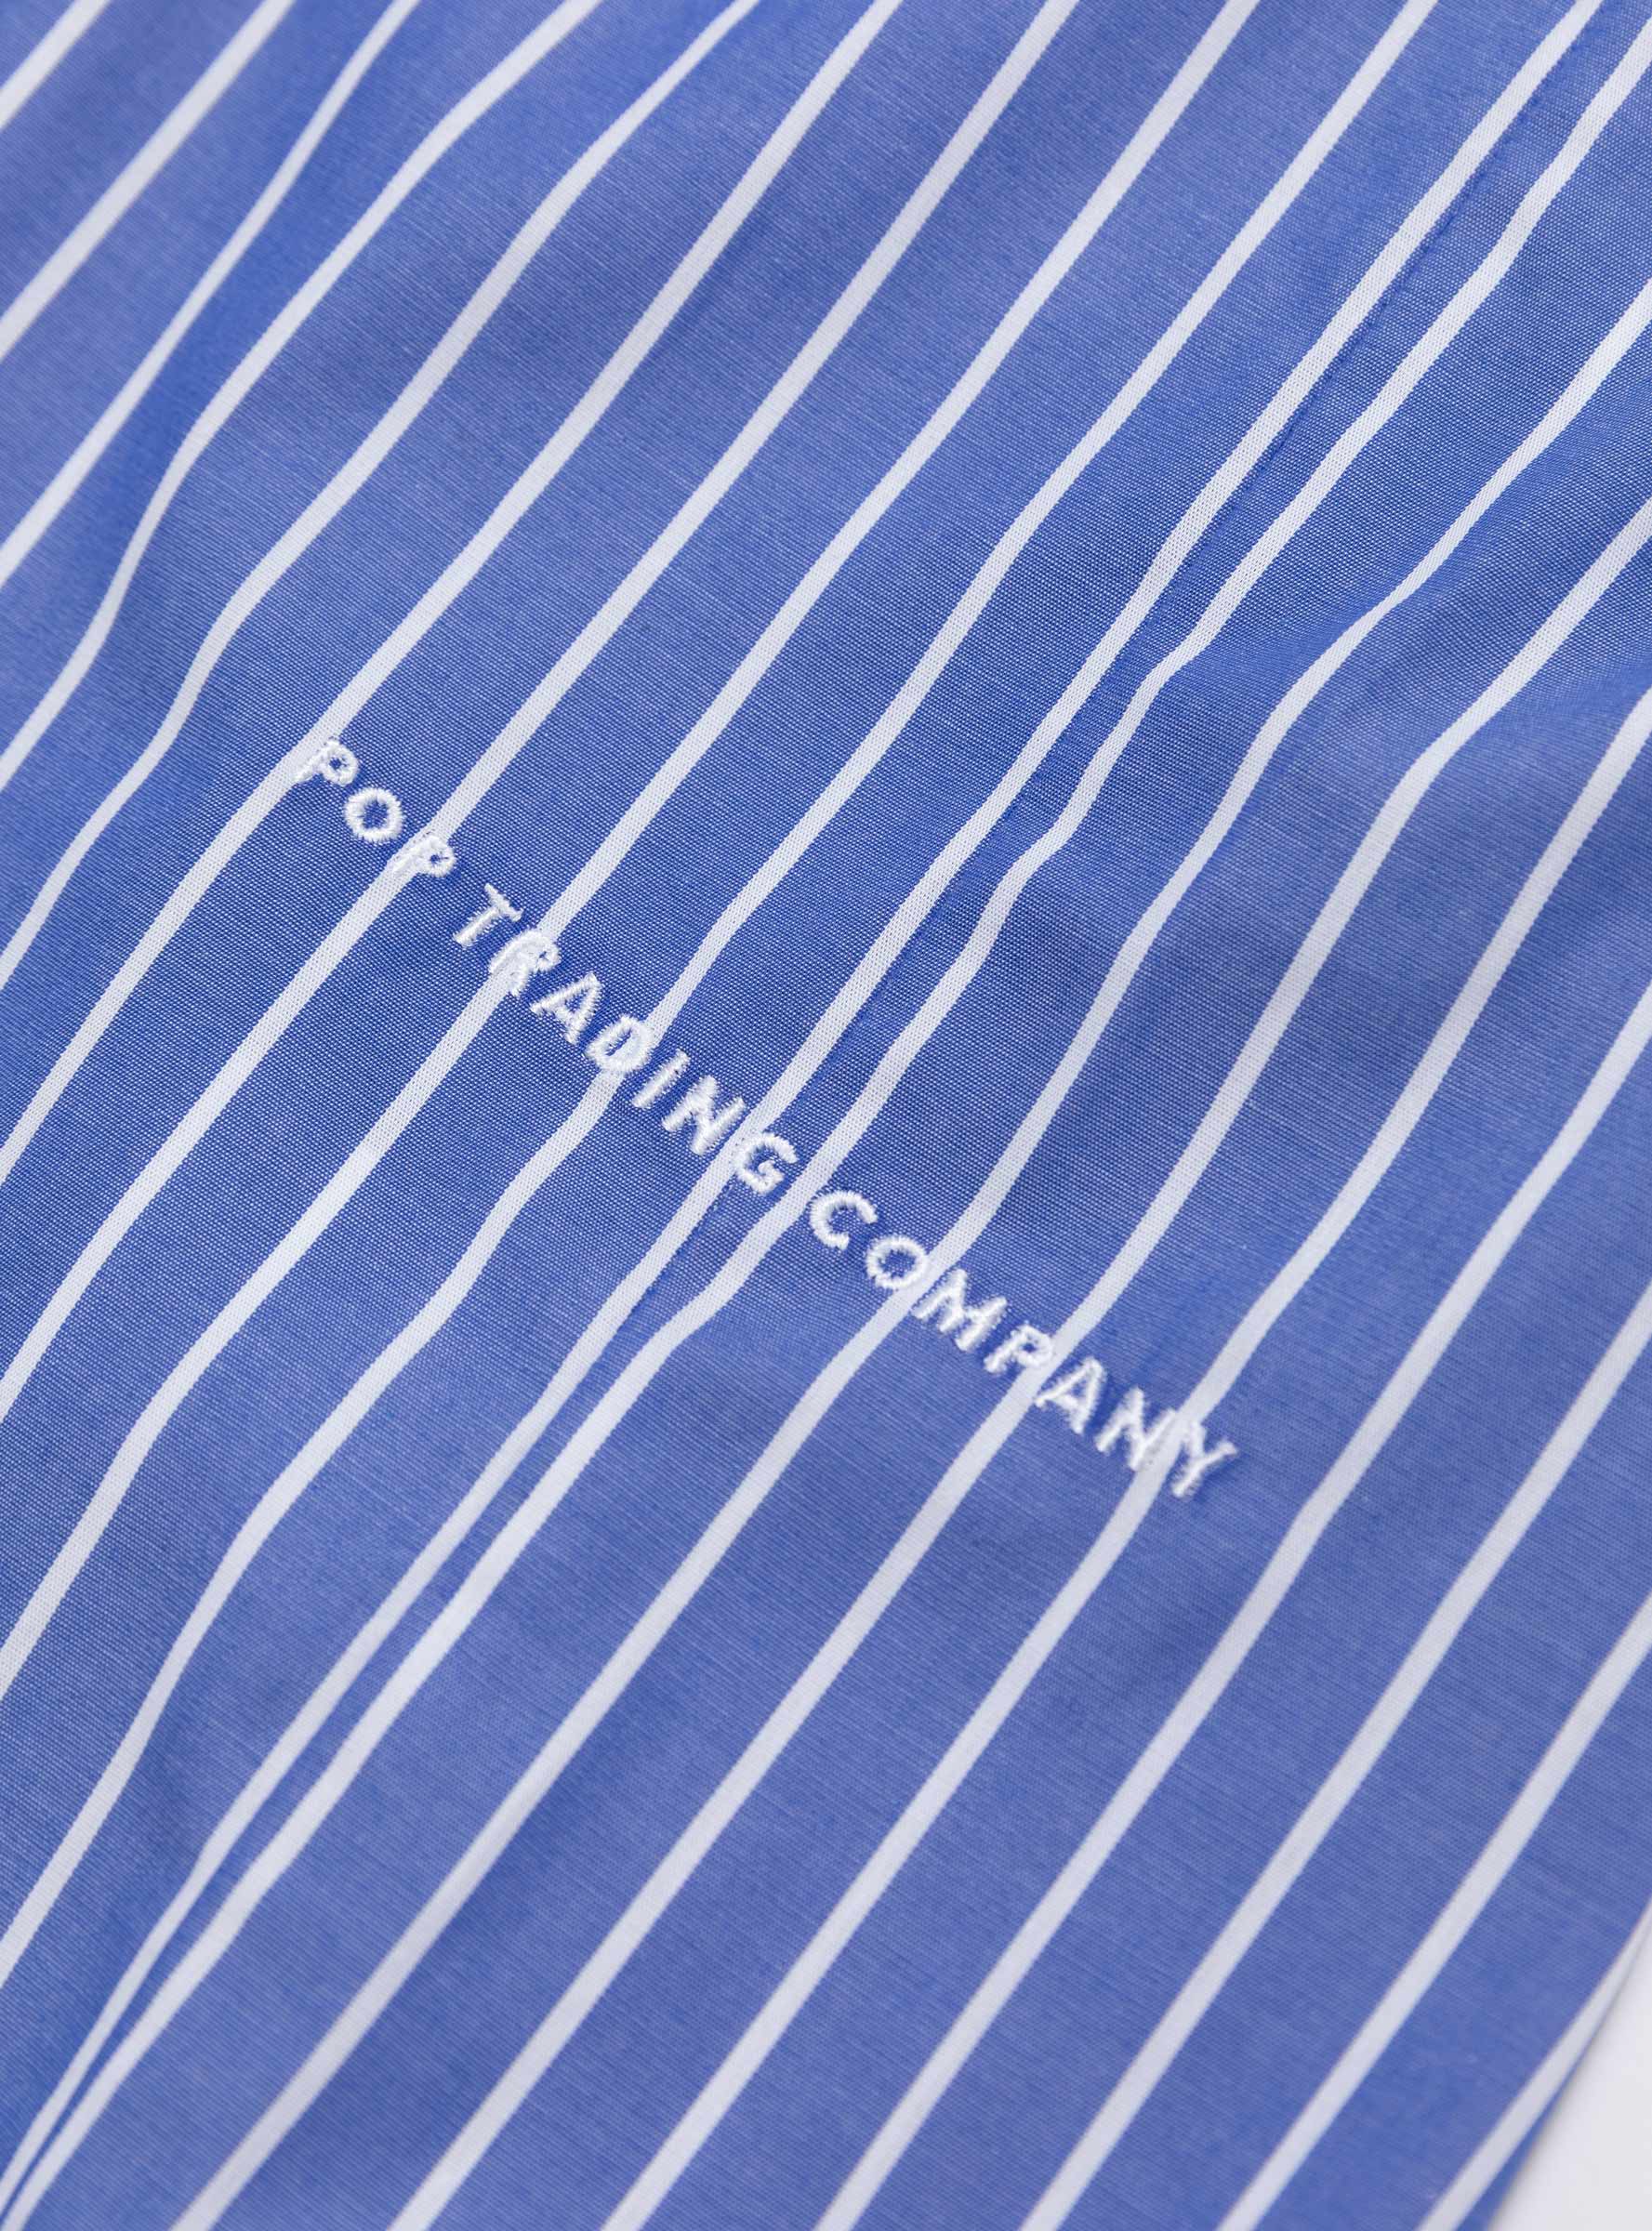 Pop Trading Company Pop Trading Company Logo Striped Shirt Blue - Size: XL